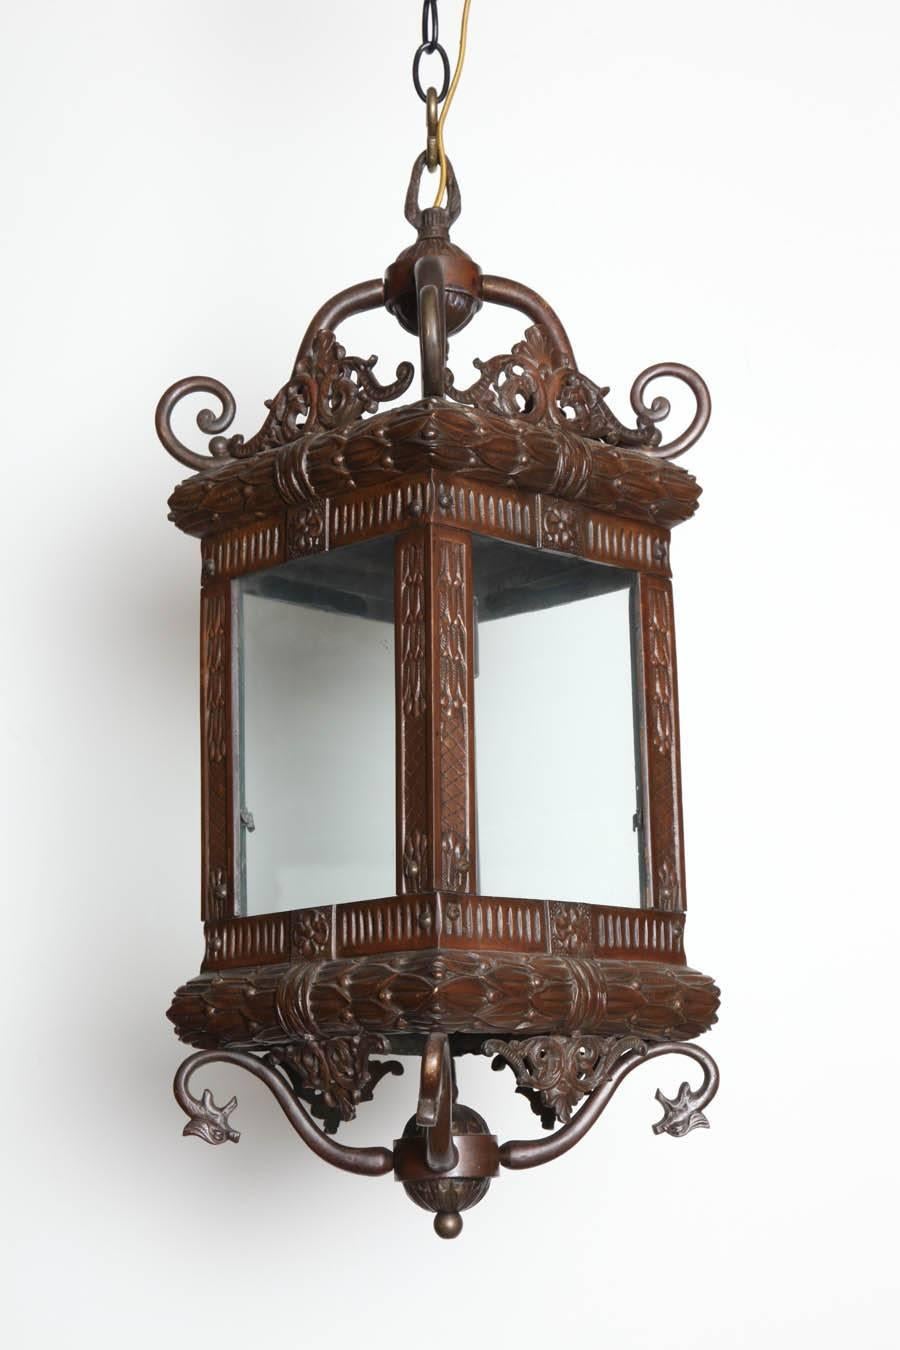 Late 19th century English bronze lantern.